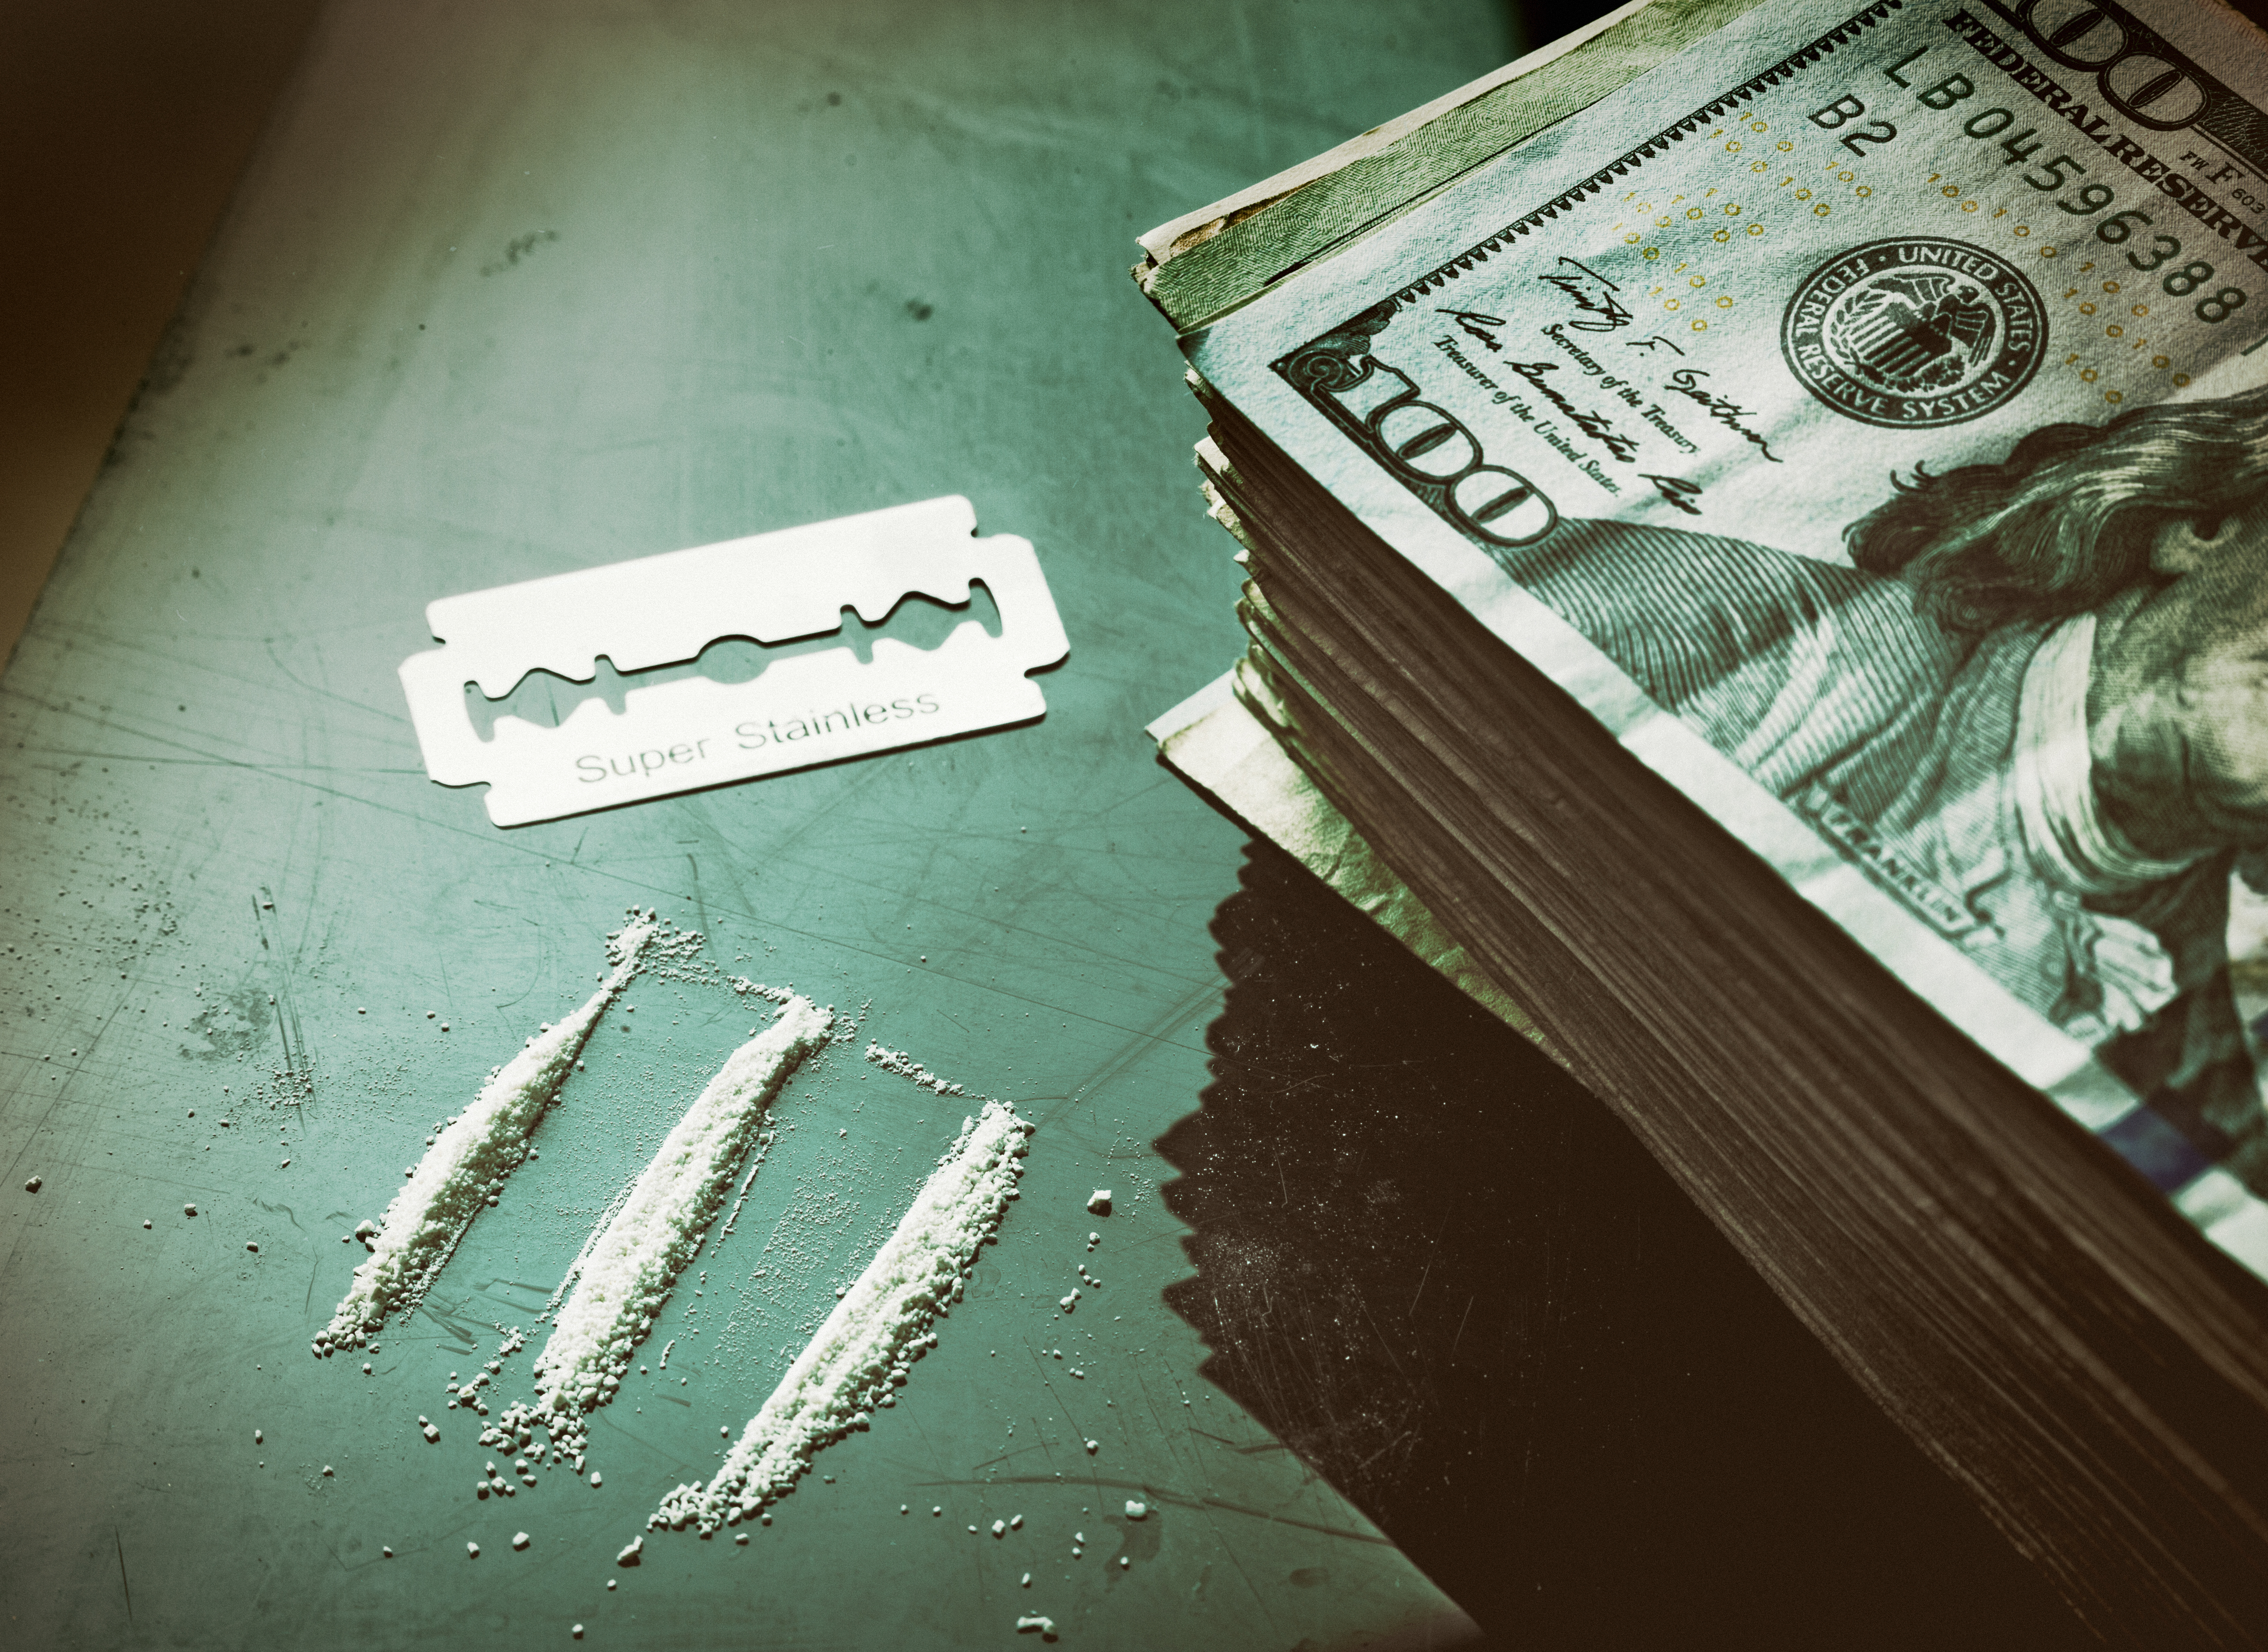 Cocaine in America: Use Rising Under the Radar